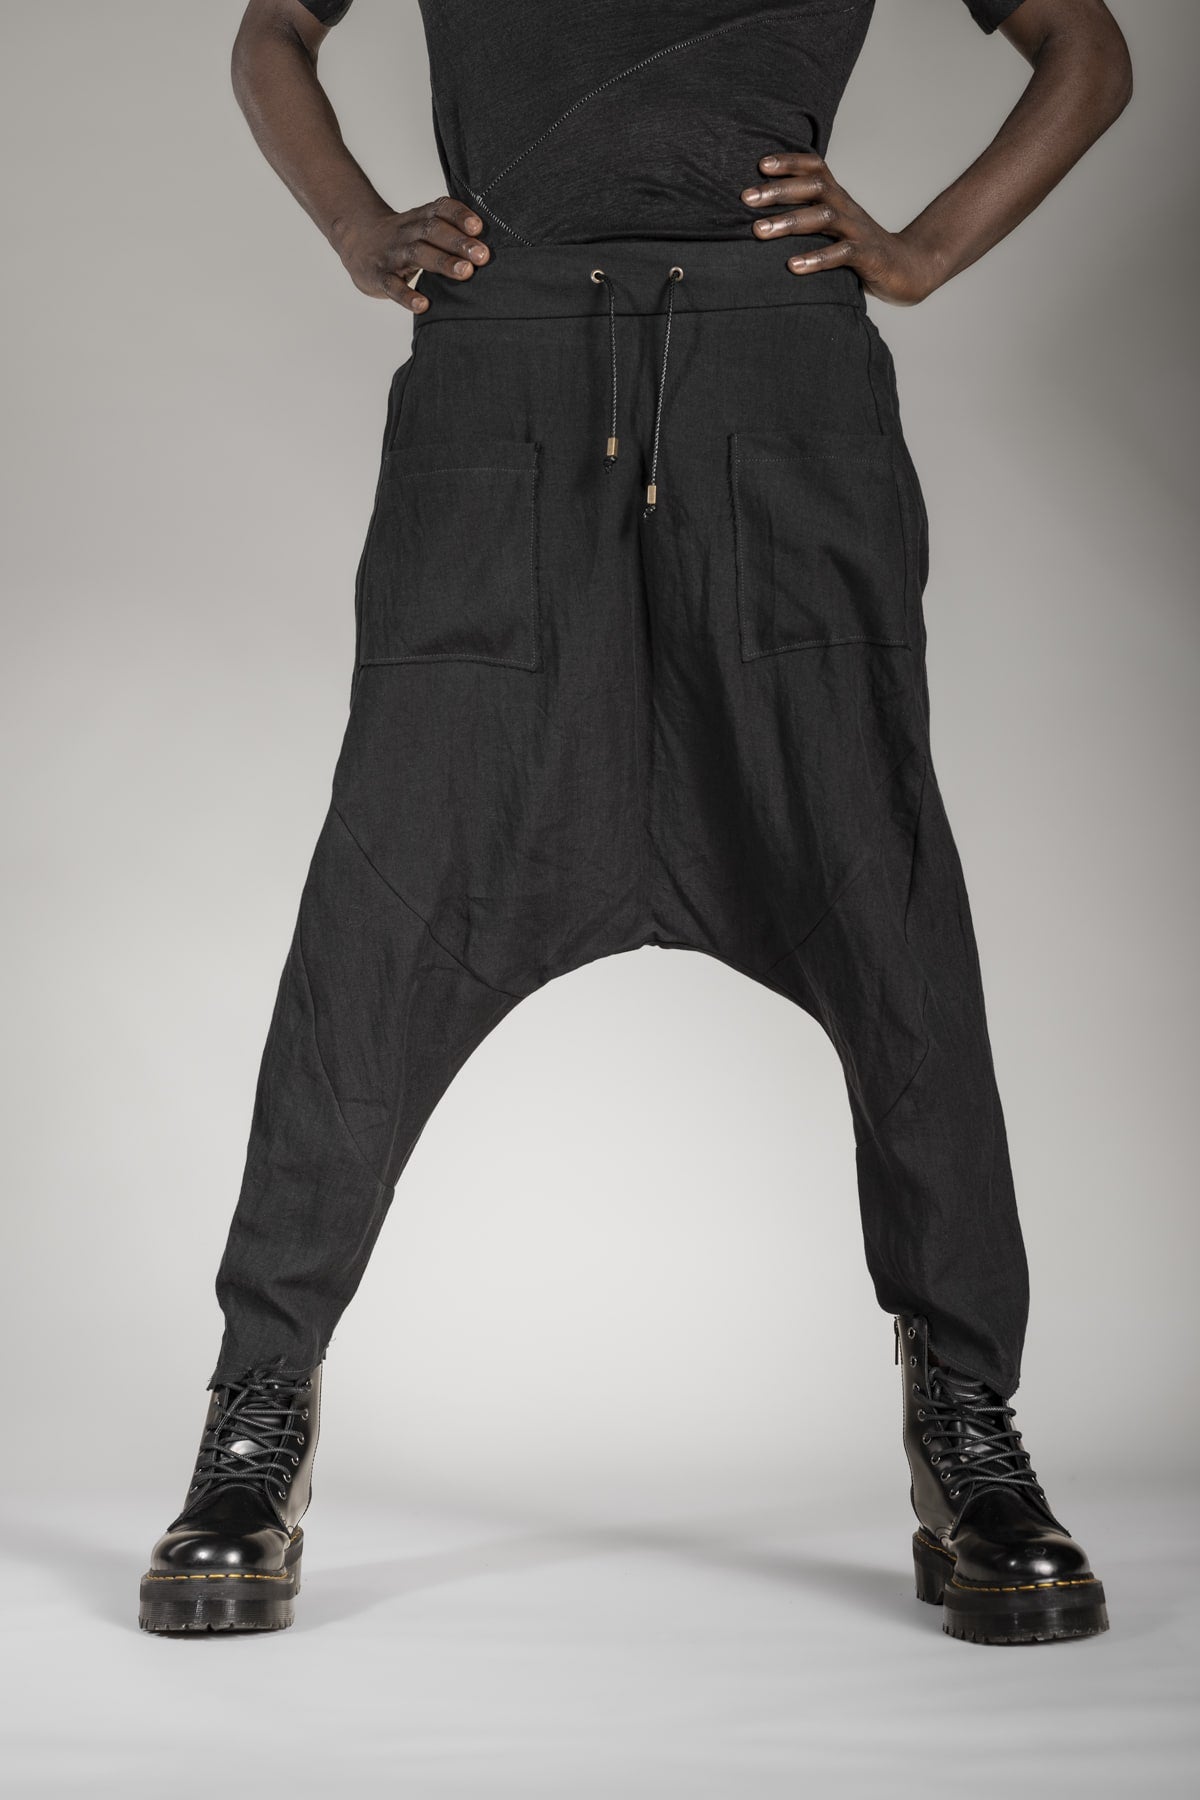 Buy Black Pants for Women by Molcha Online  Ajiocom